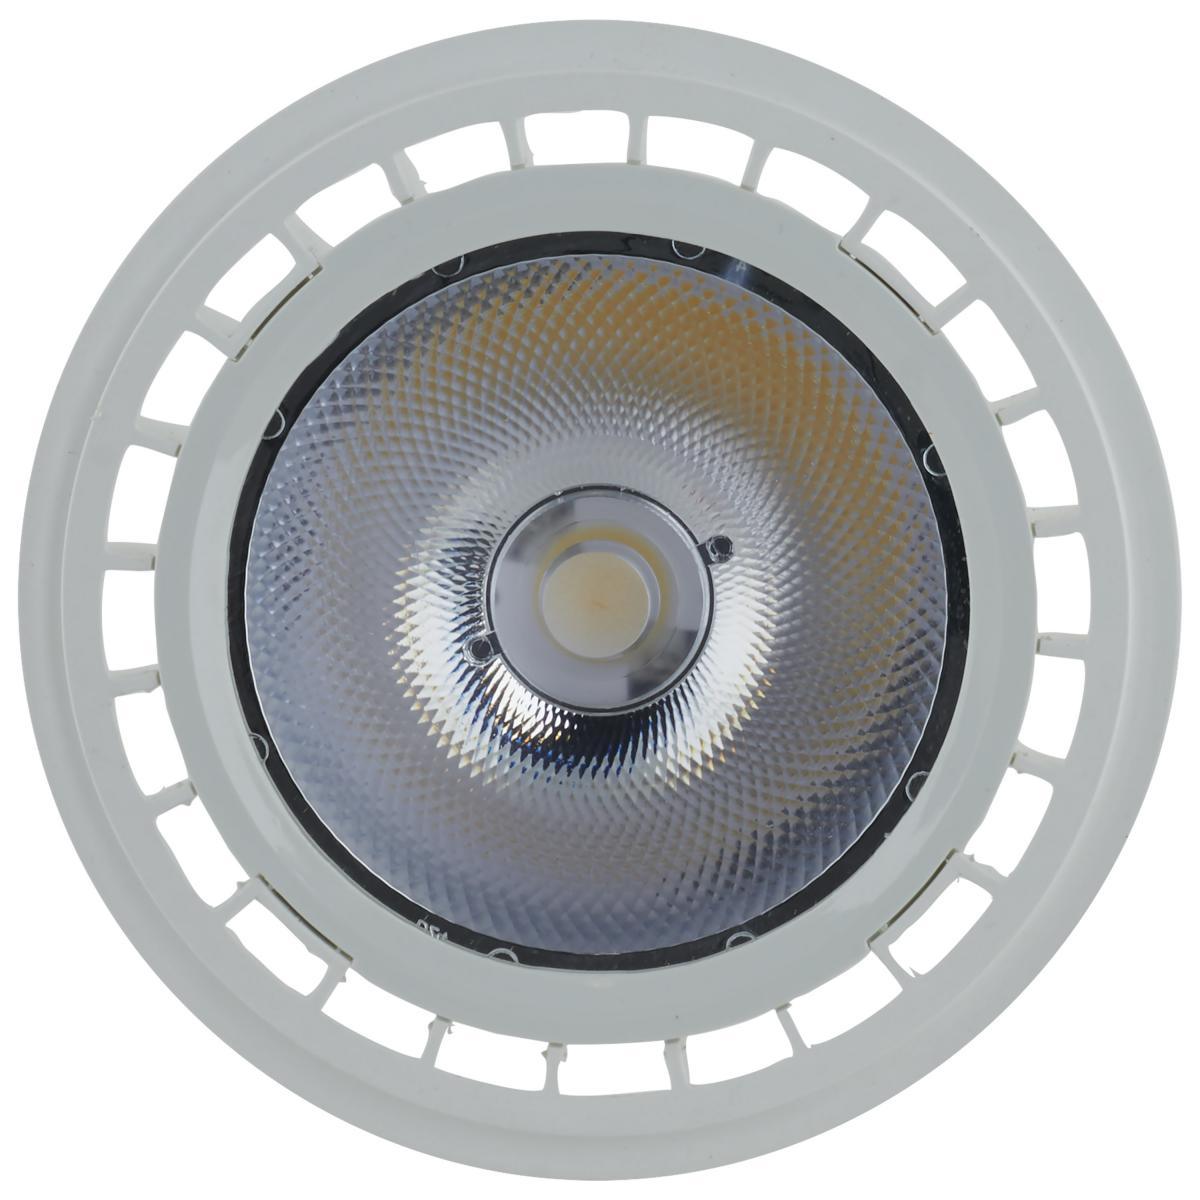 LED AR111 Reflector bulb, 7 watt, 600 Lumens, 3000K, G53 Base, 36 Deg. Flood